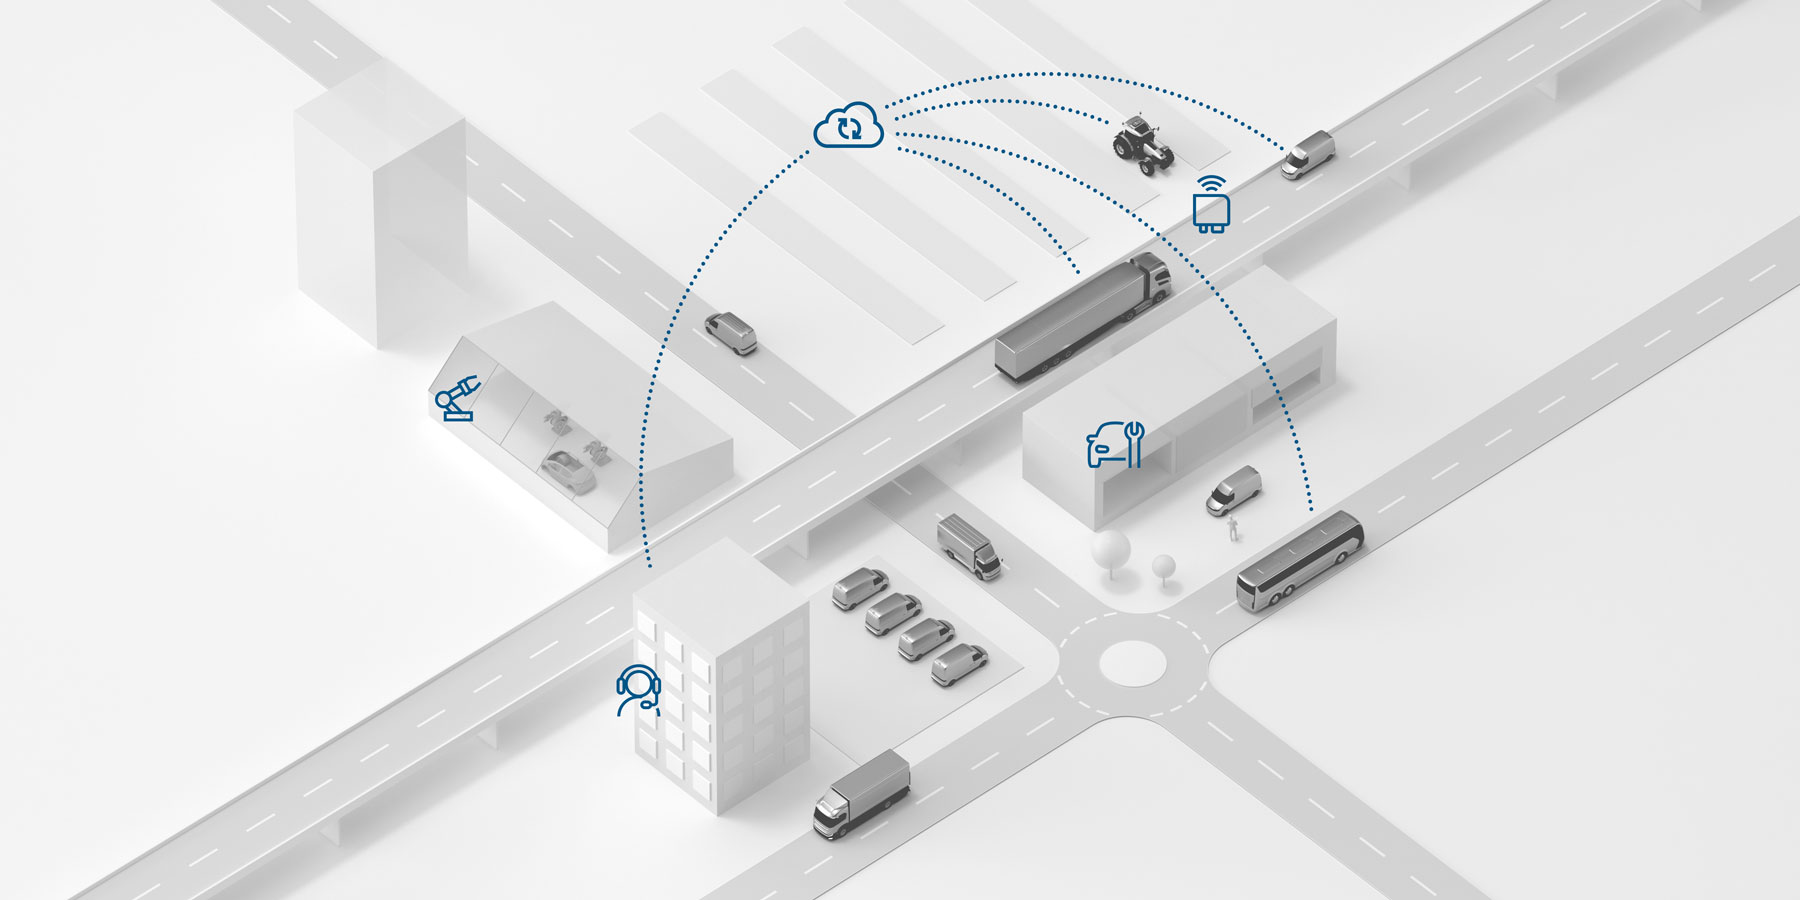 Automotive connectivity hub functionality